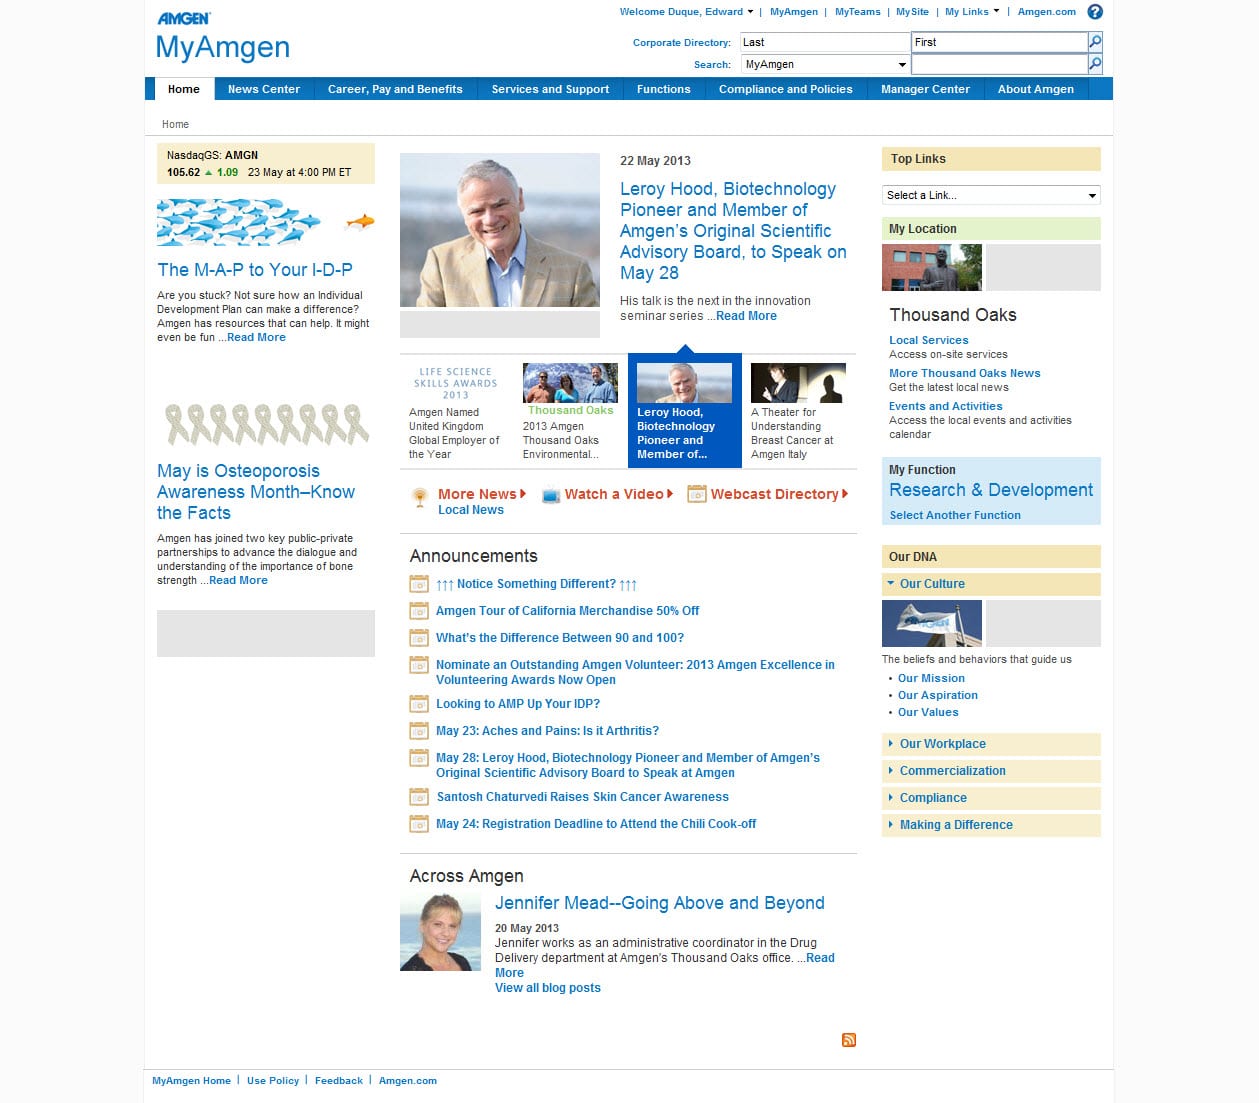 Screenshot of Amgen intranet homepage